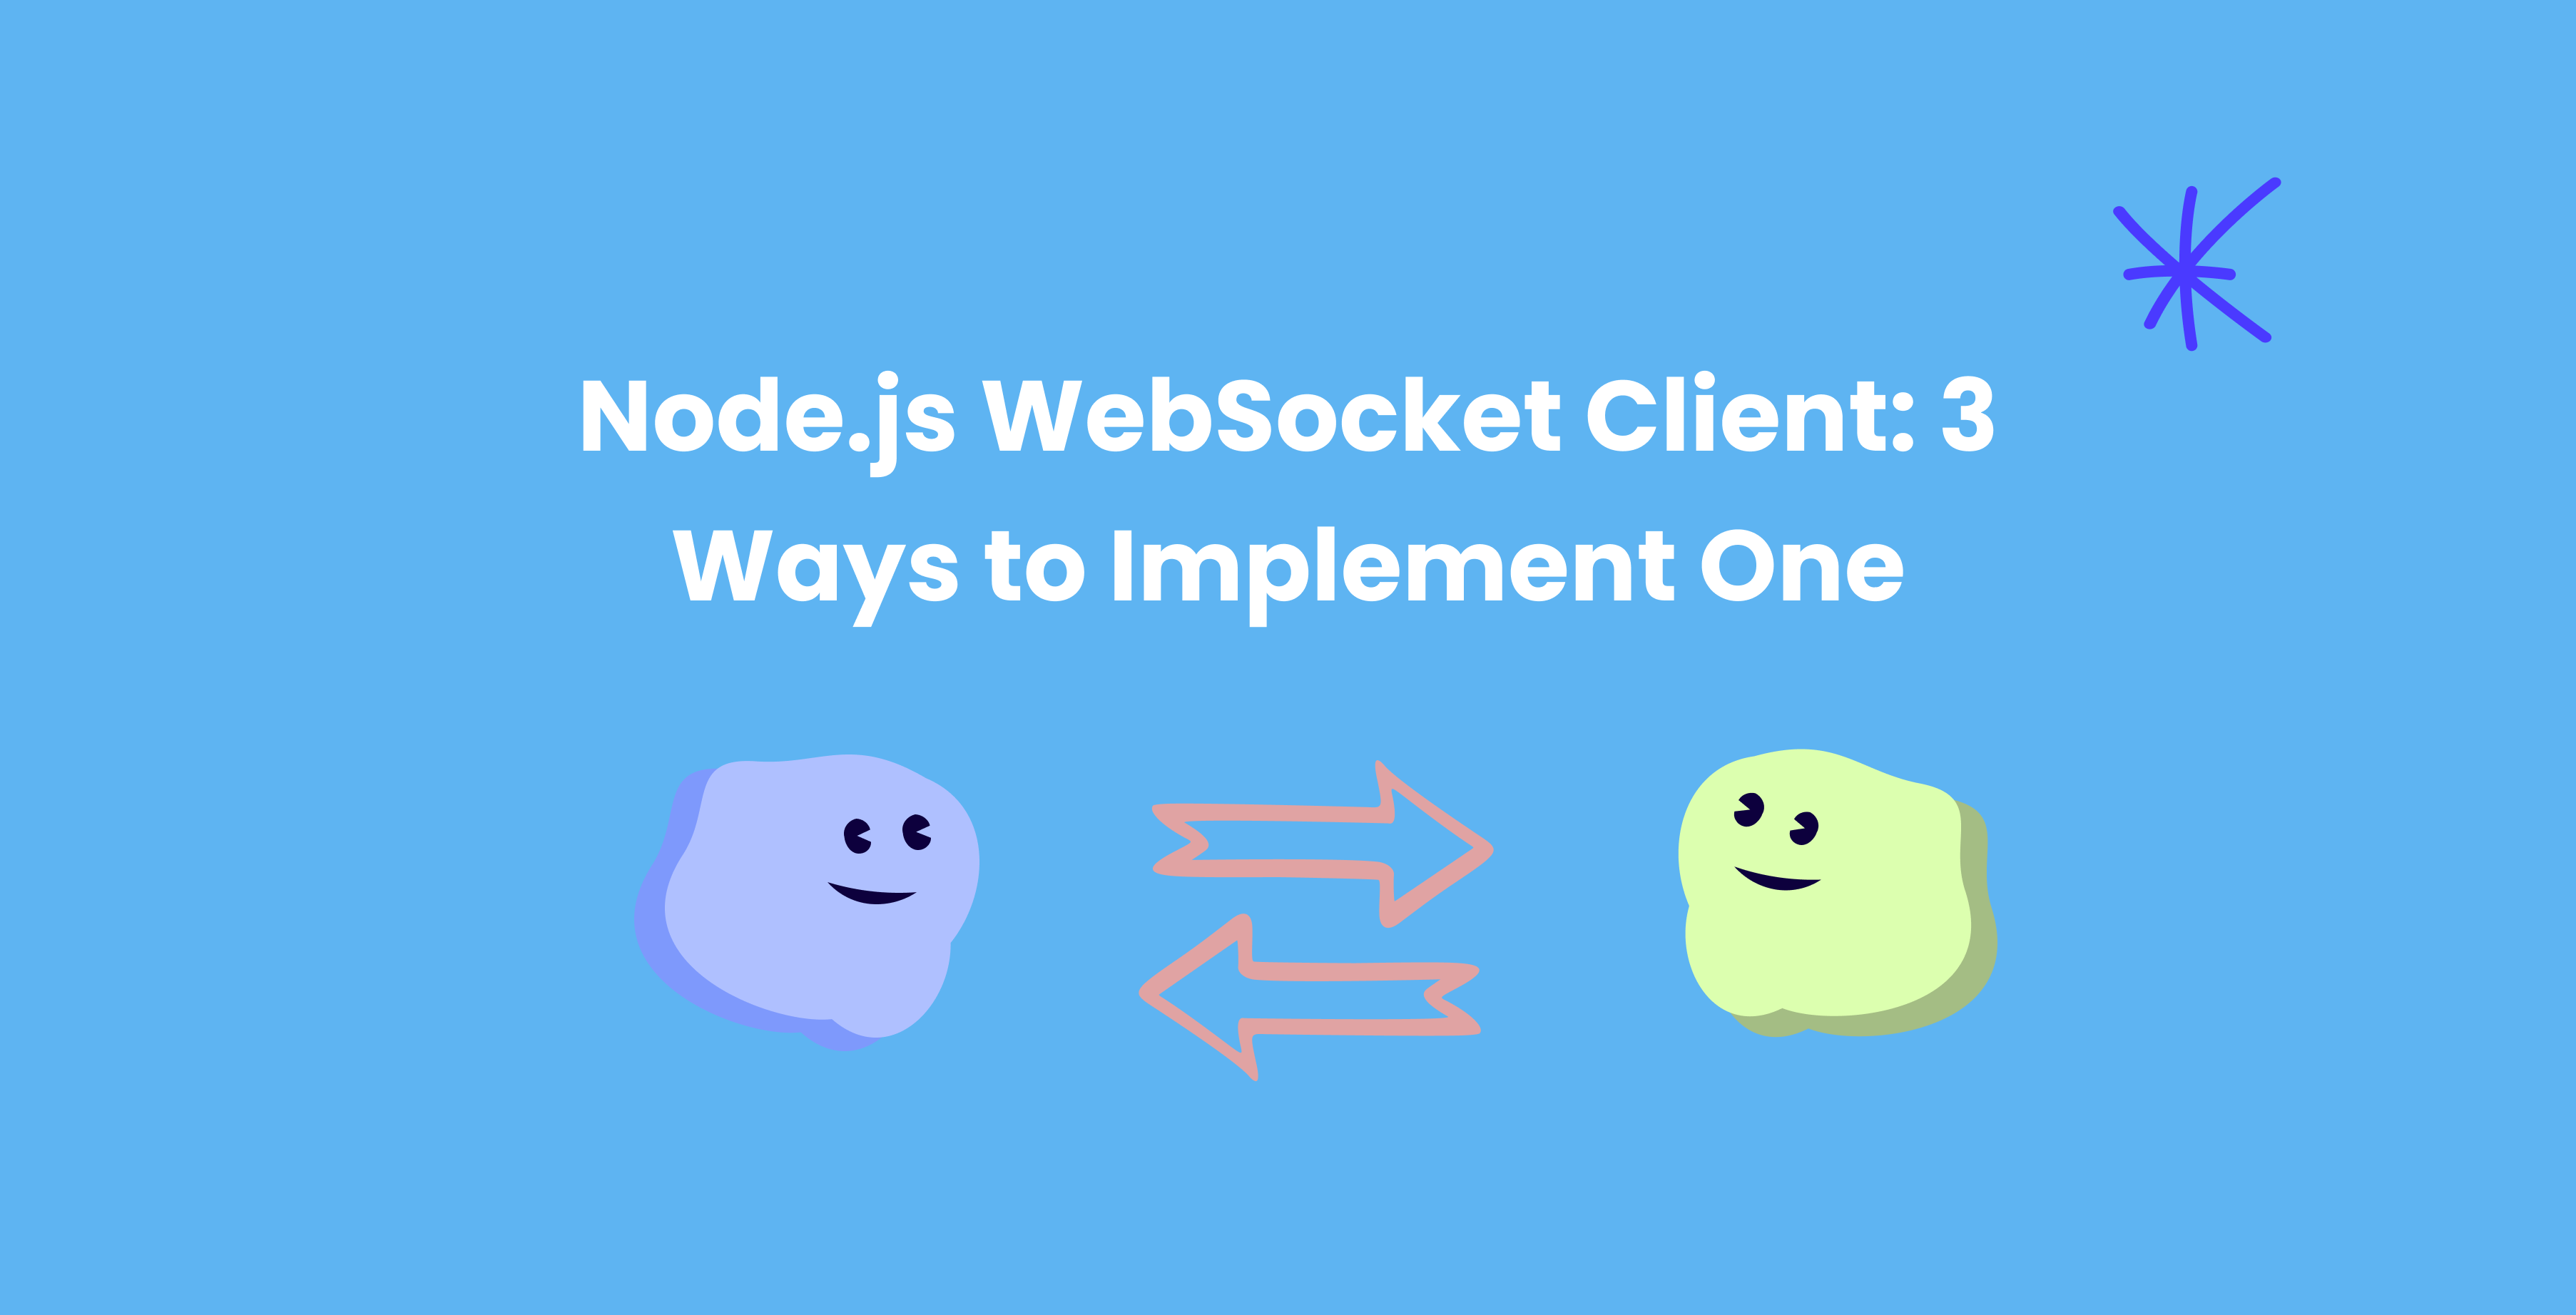 Node.js WebSocket Client: 3 Ways to Implement One